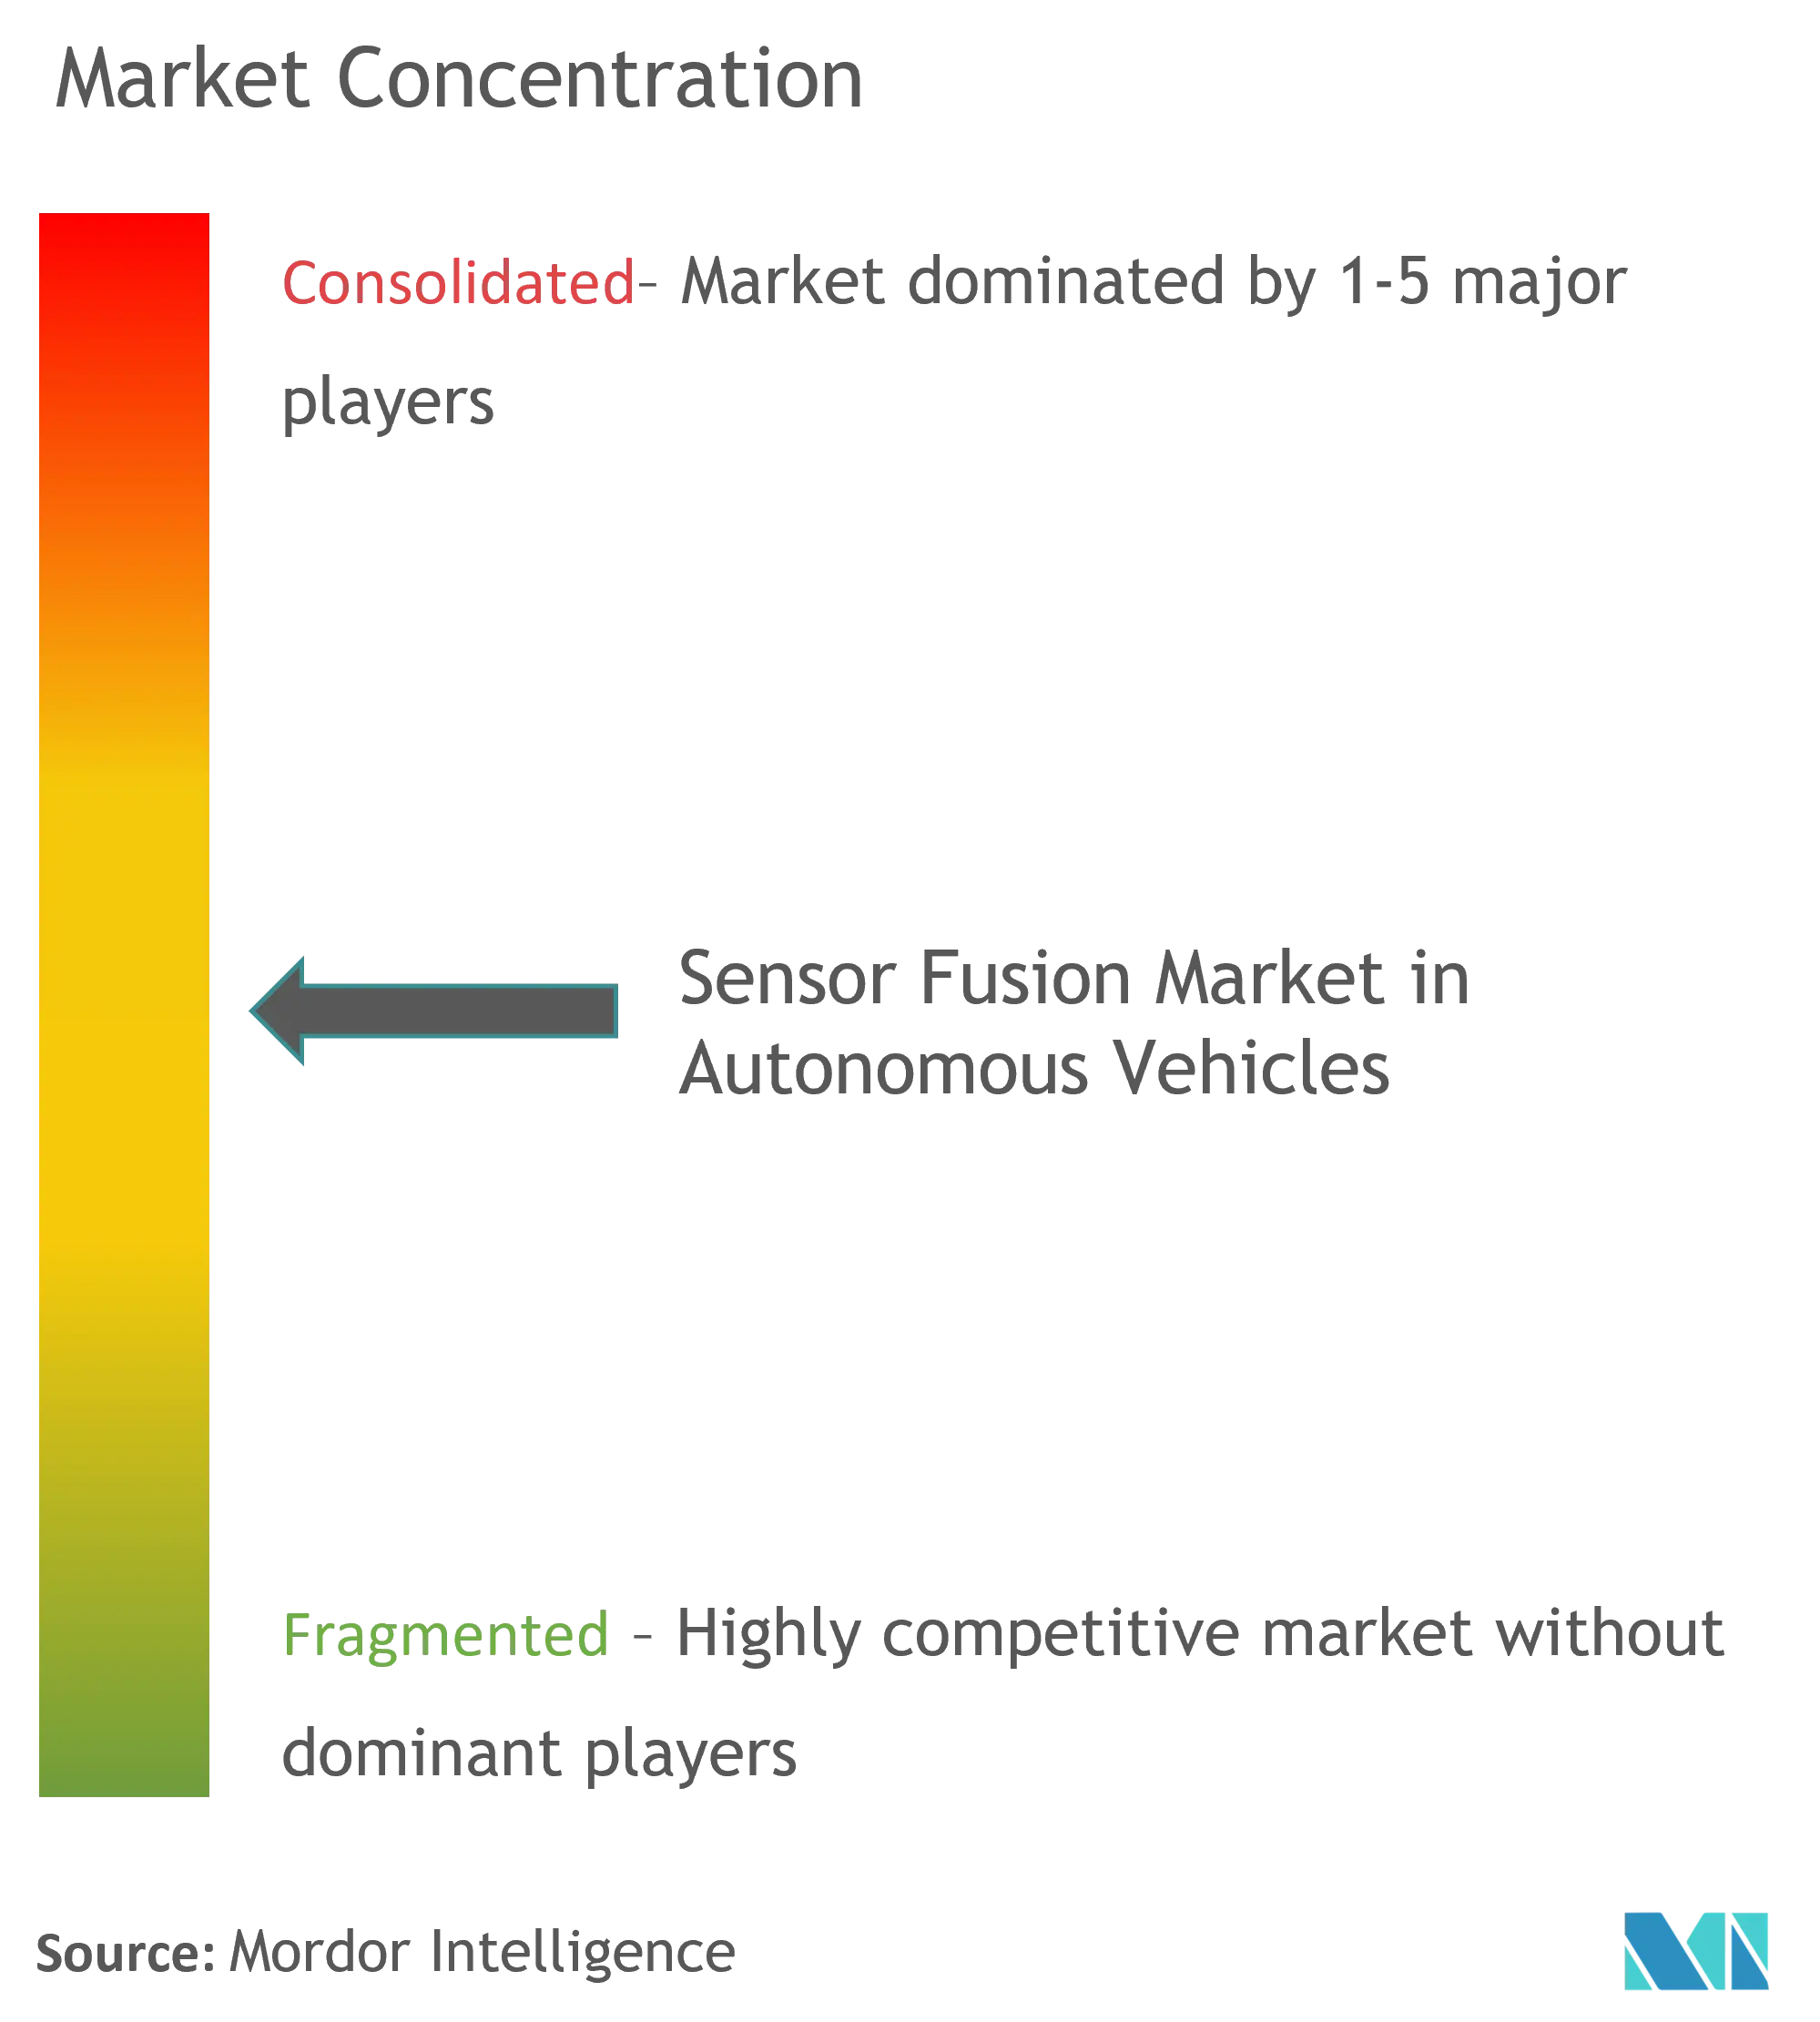 Sensor Fusion Market Concentration